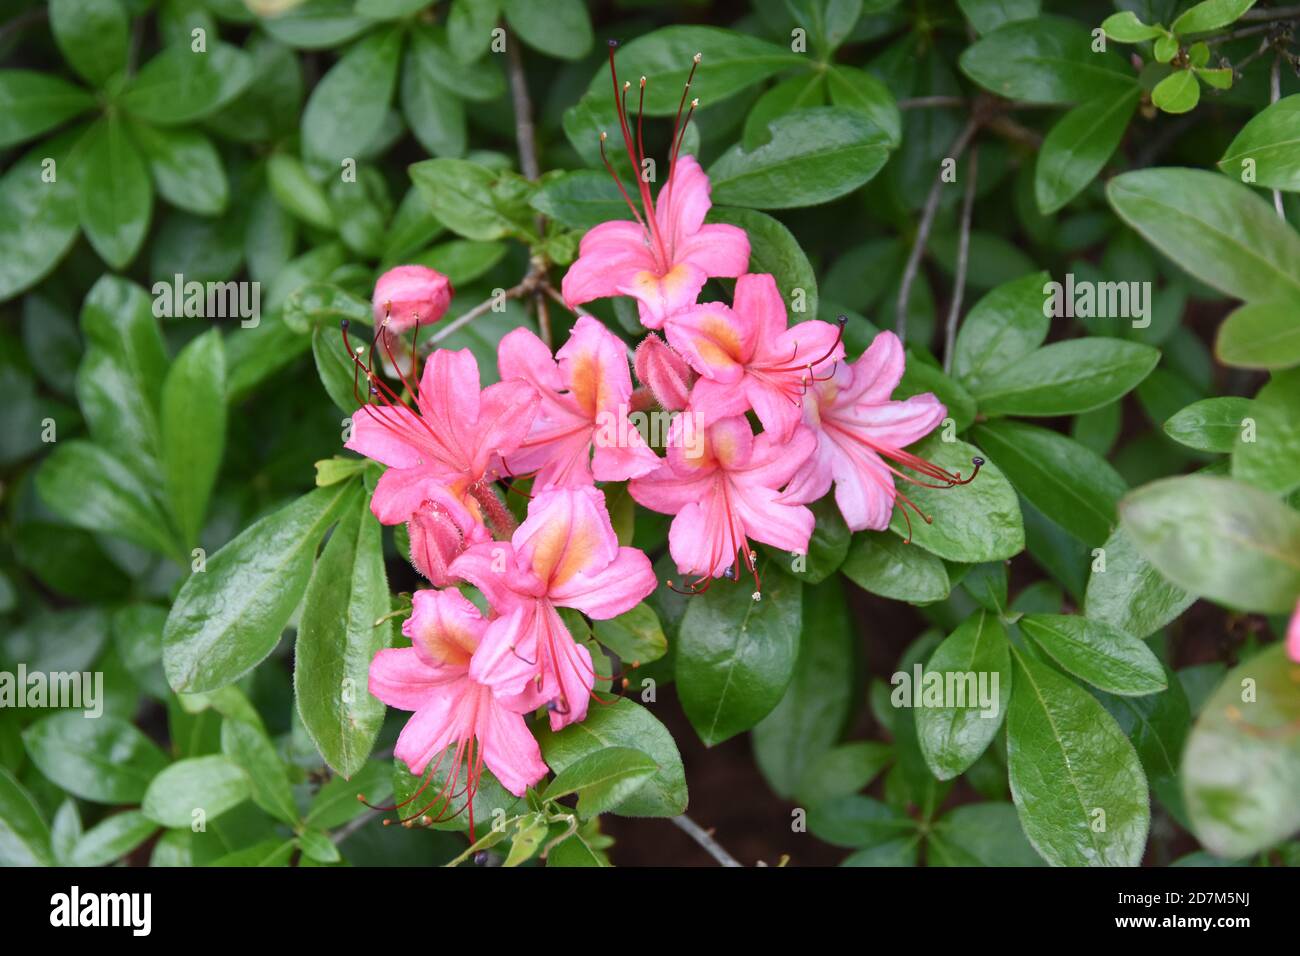 Broadleaf evergreen shrub fotografías e imágenes de alta resolución - Alamy